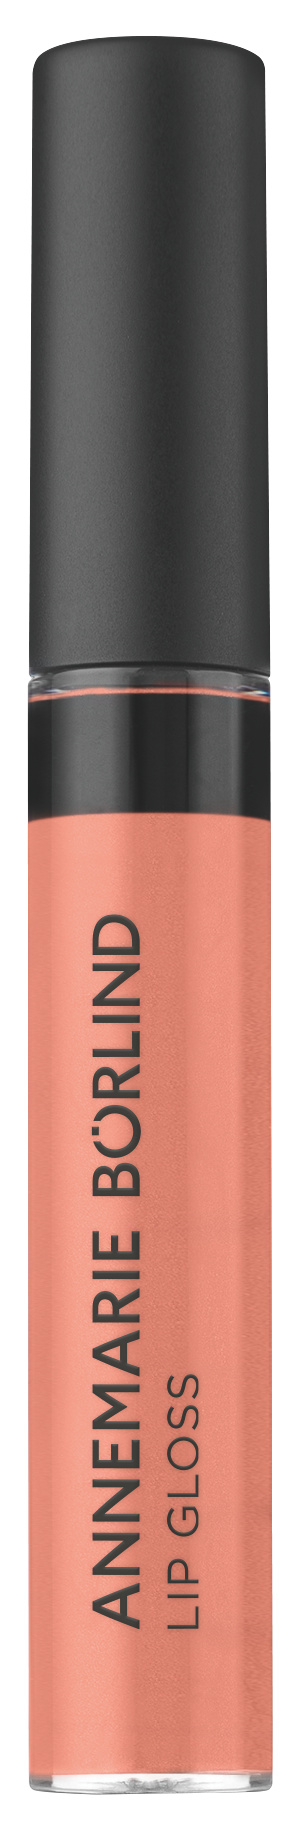 Börlind Lip Gloss glowy peach 9.5ml